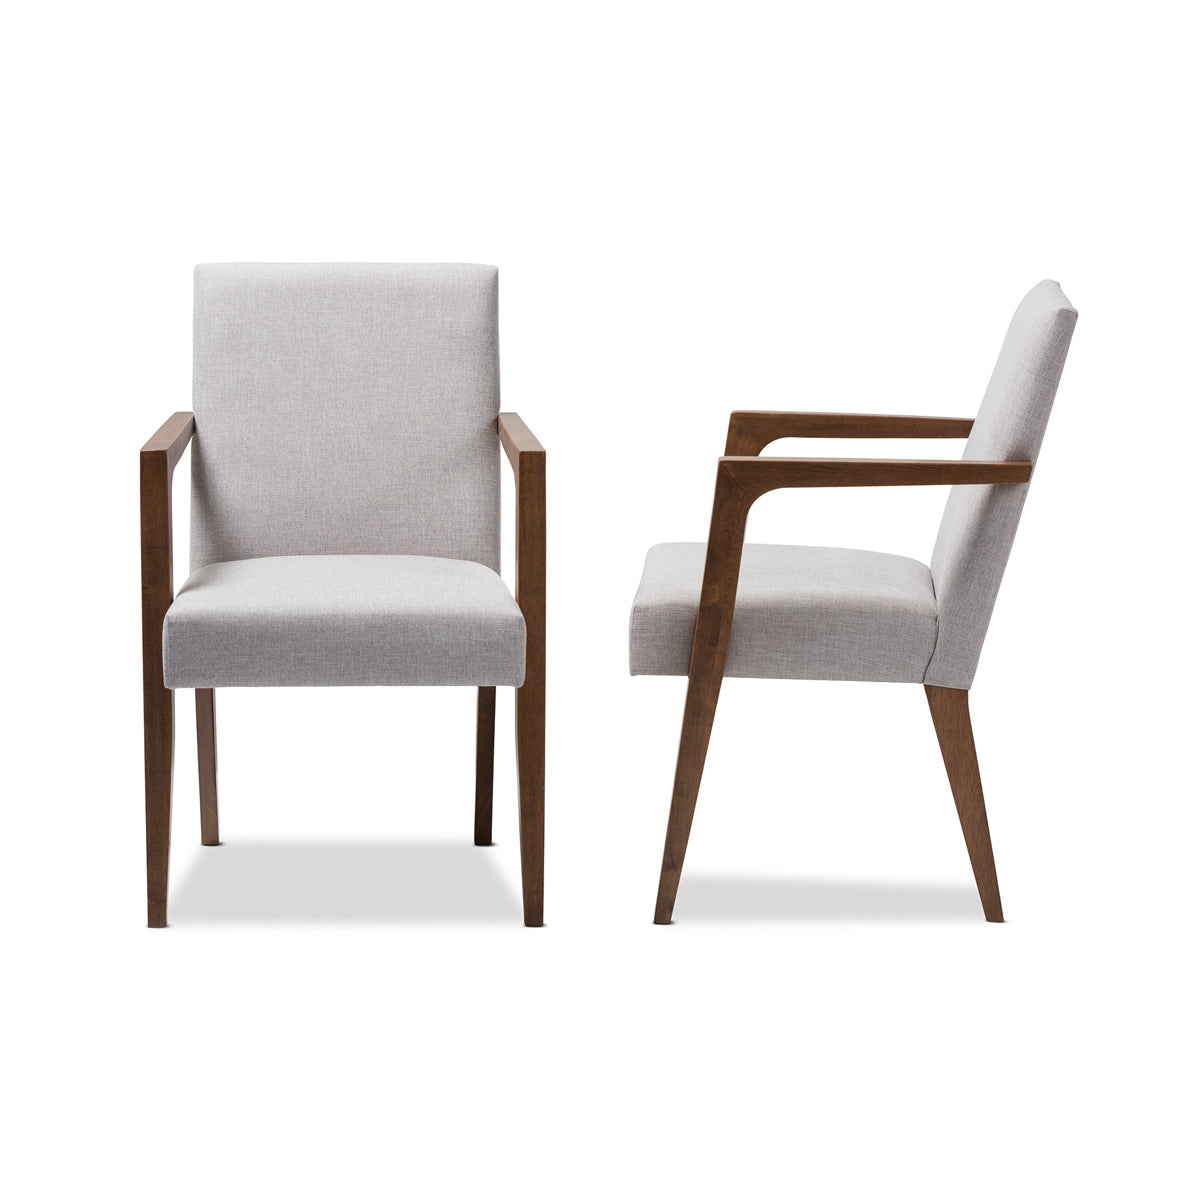 Baxton Studio Andrea Mid-Century Modern Greyish Beige Upholstered Wooden Armchair (Set of 2) Baxton Studio-chairs-Minimal And Modern - 4